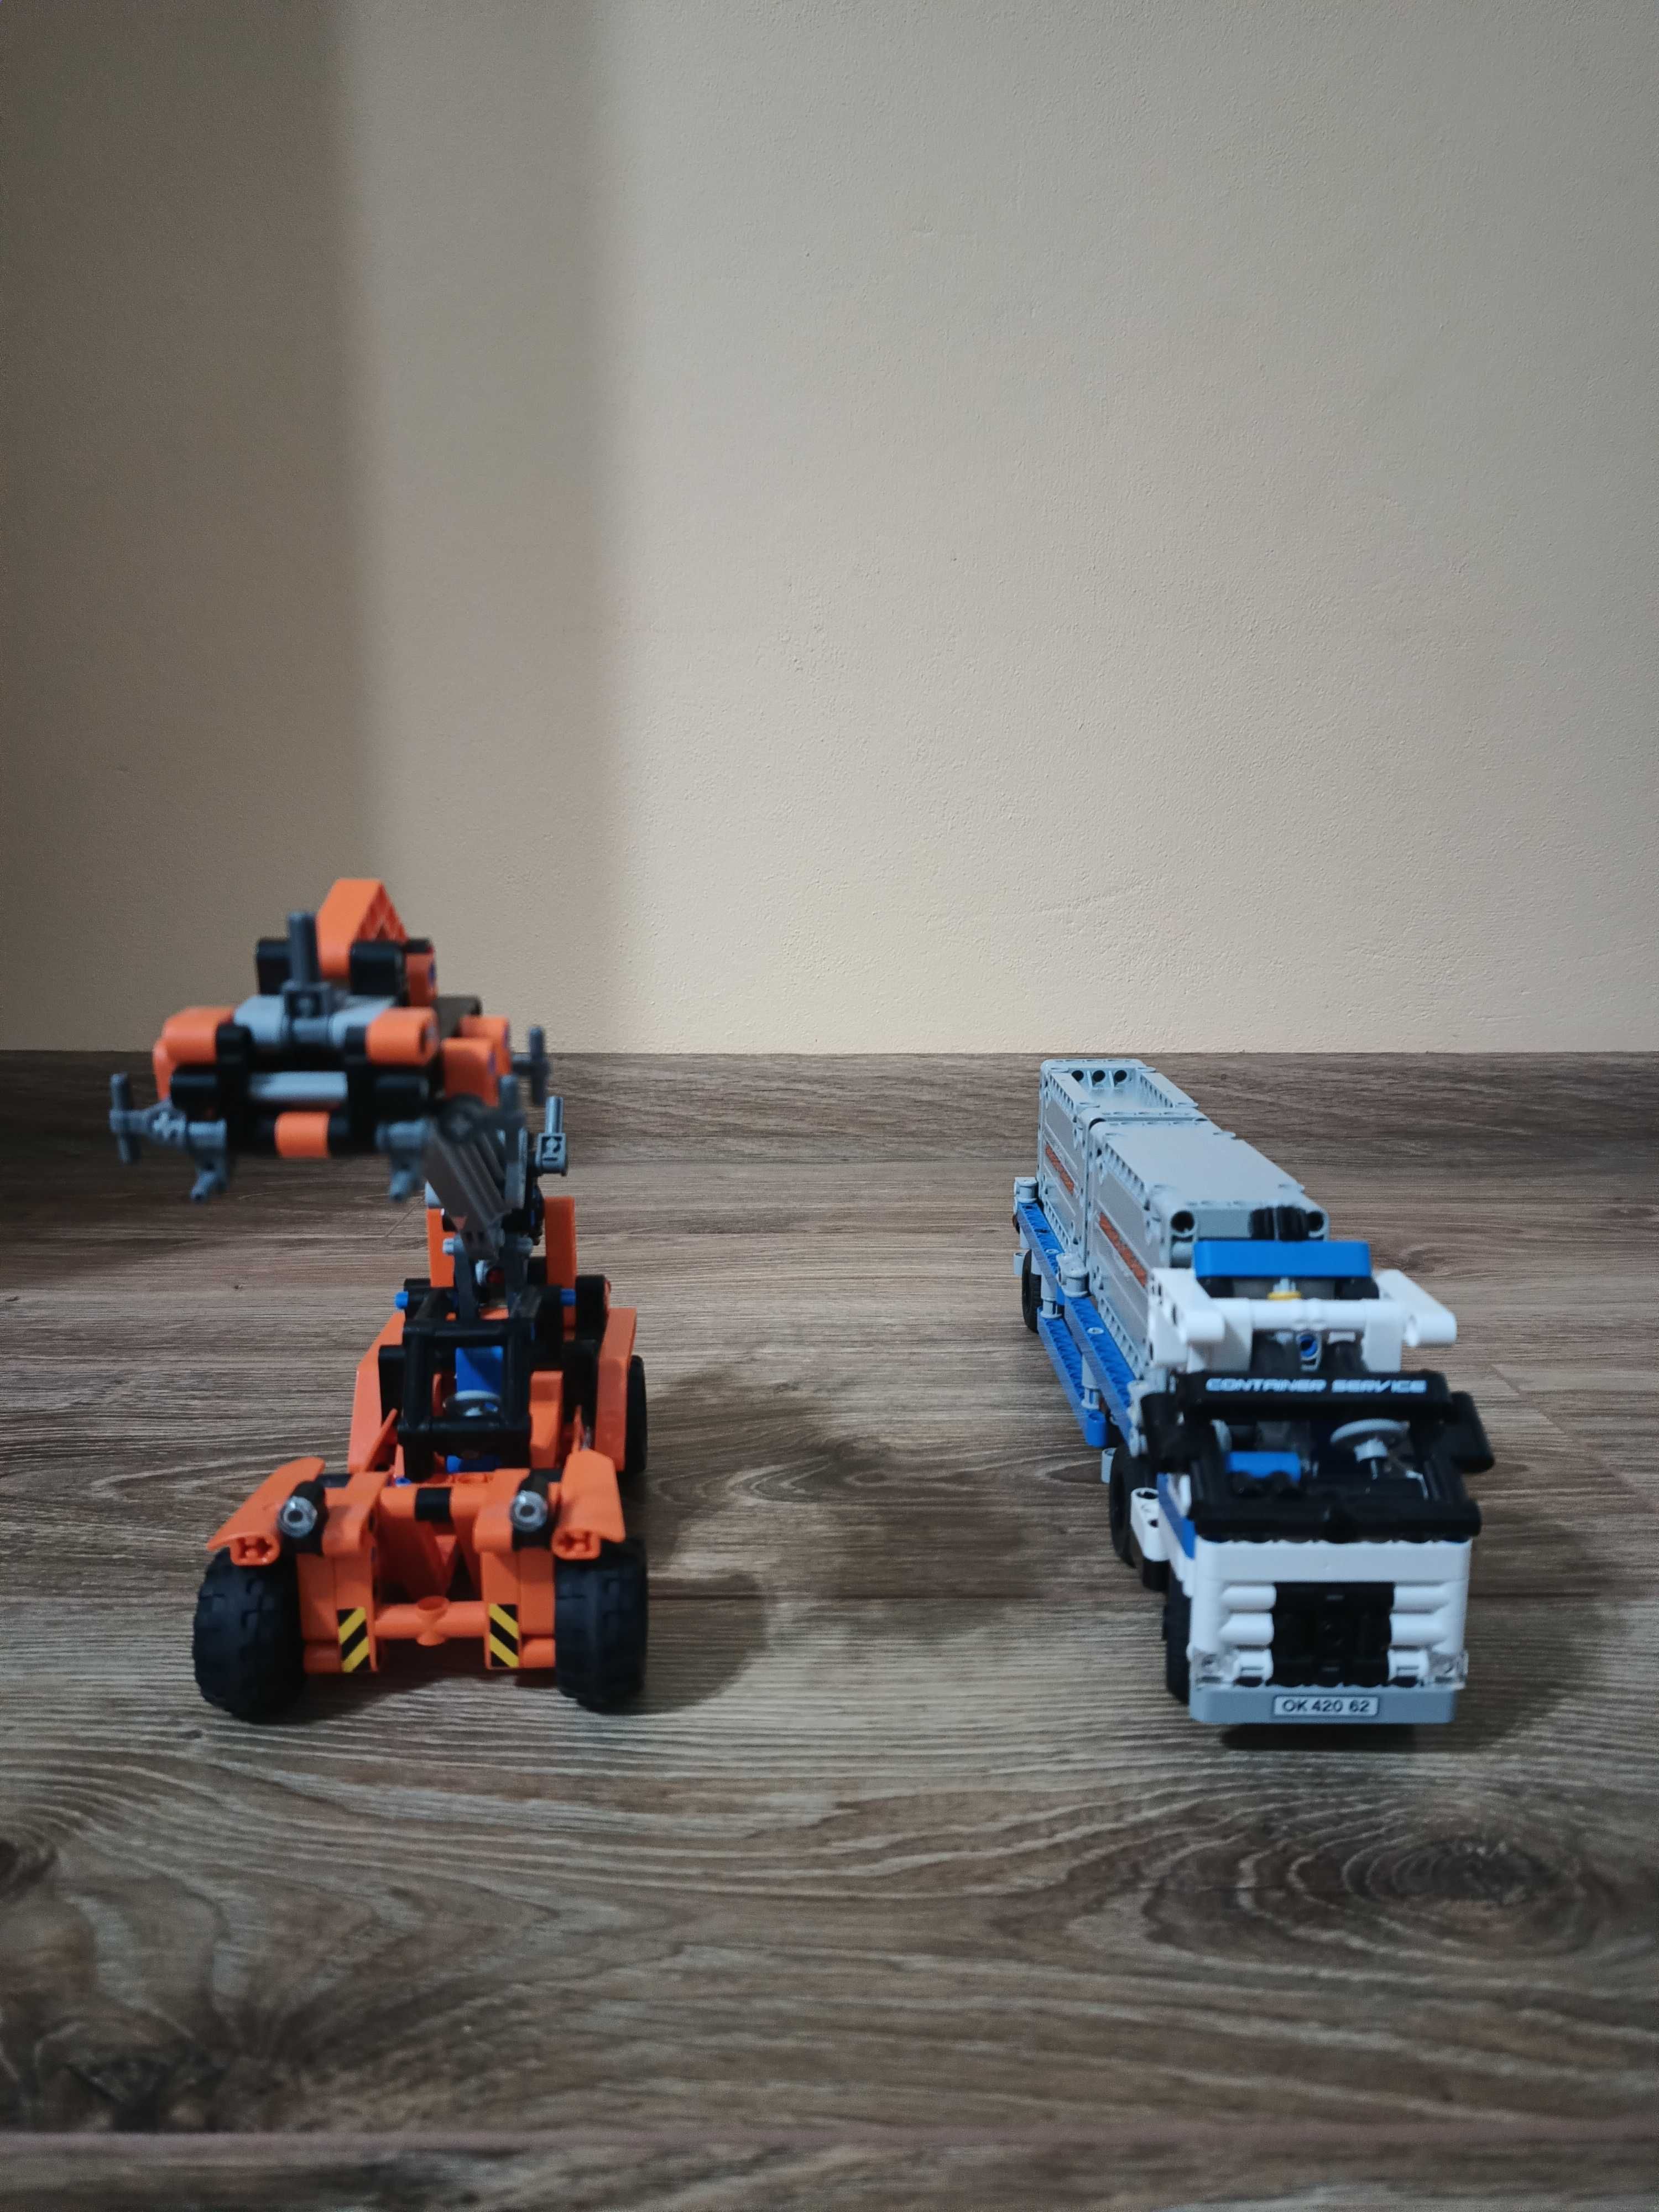 LEGO Technic 42062